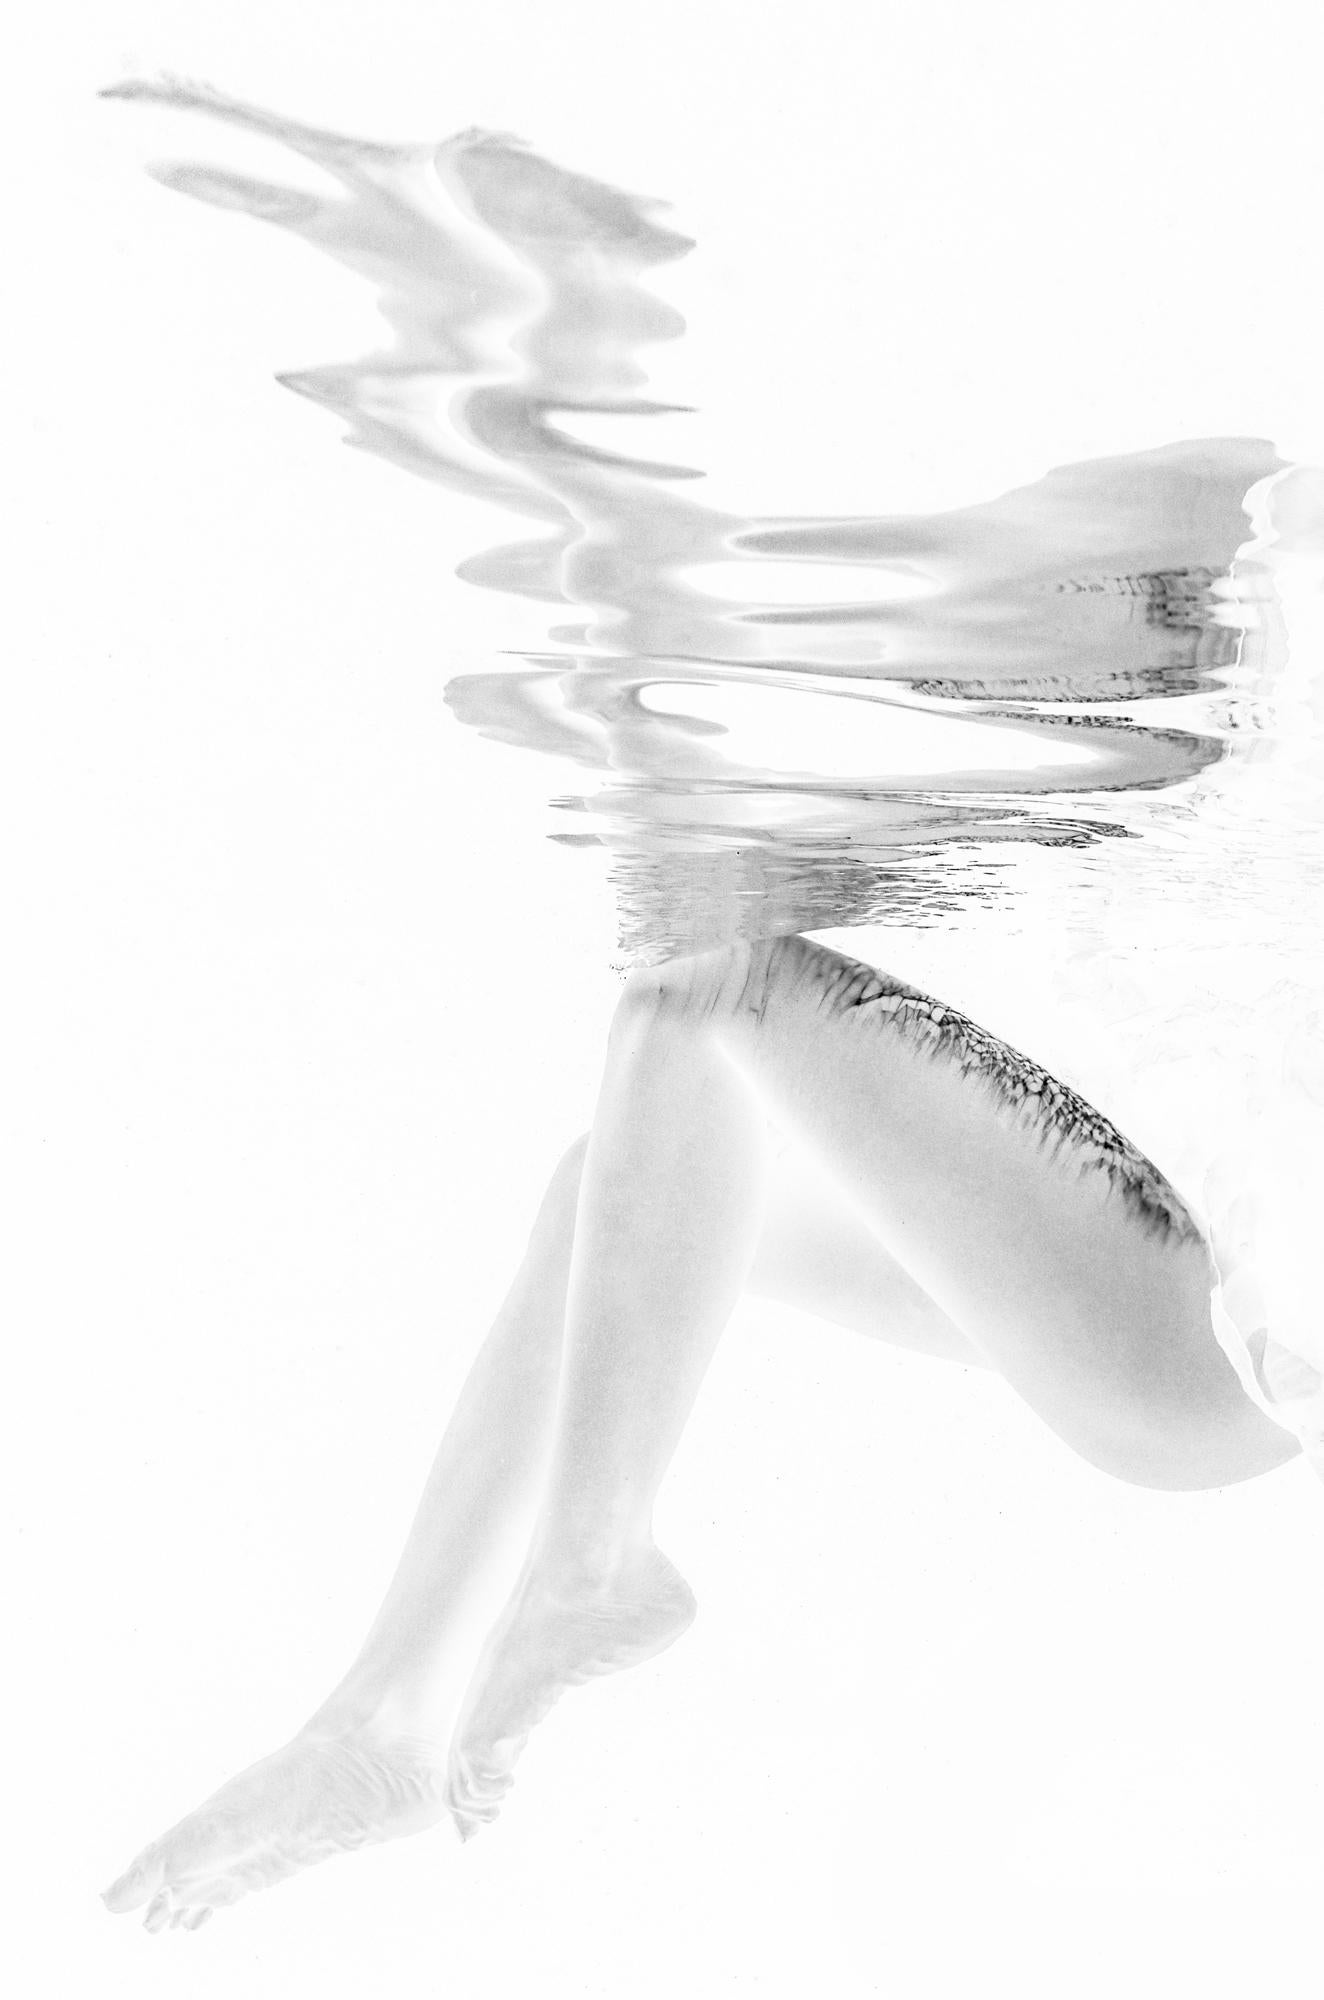 Alex Sher Figurative Photograph - Sketch - underwater b&w photograph - archival pigment print 35x23"